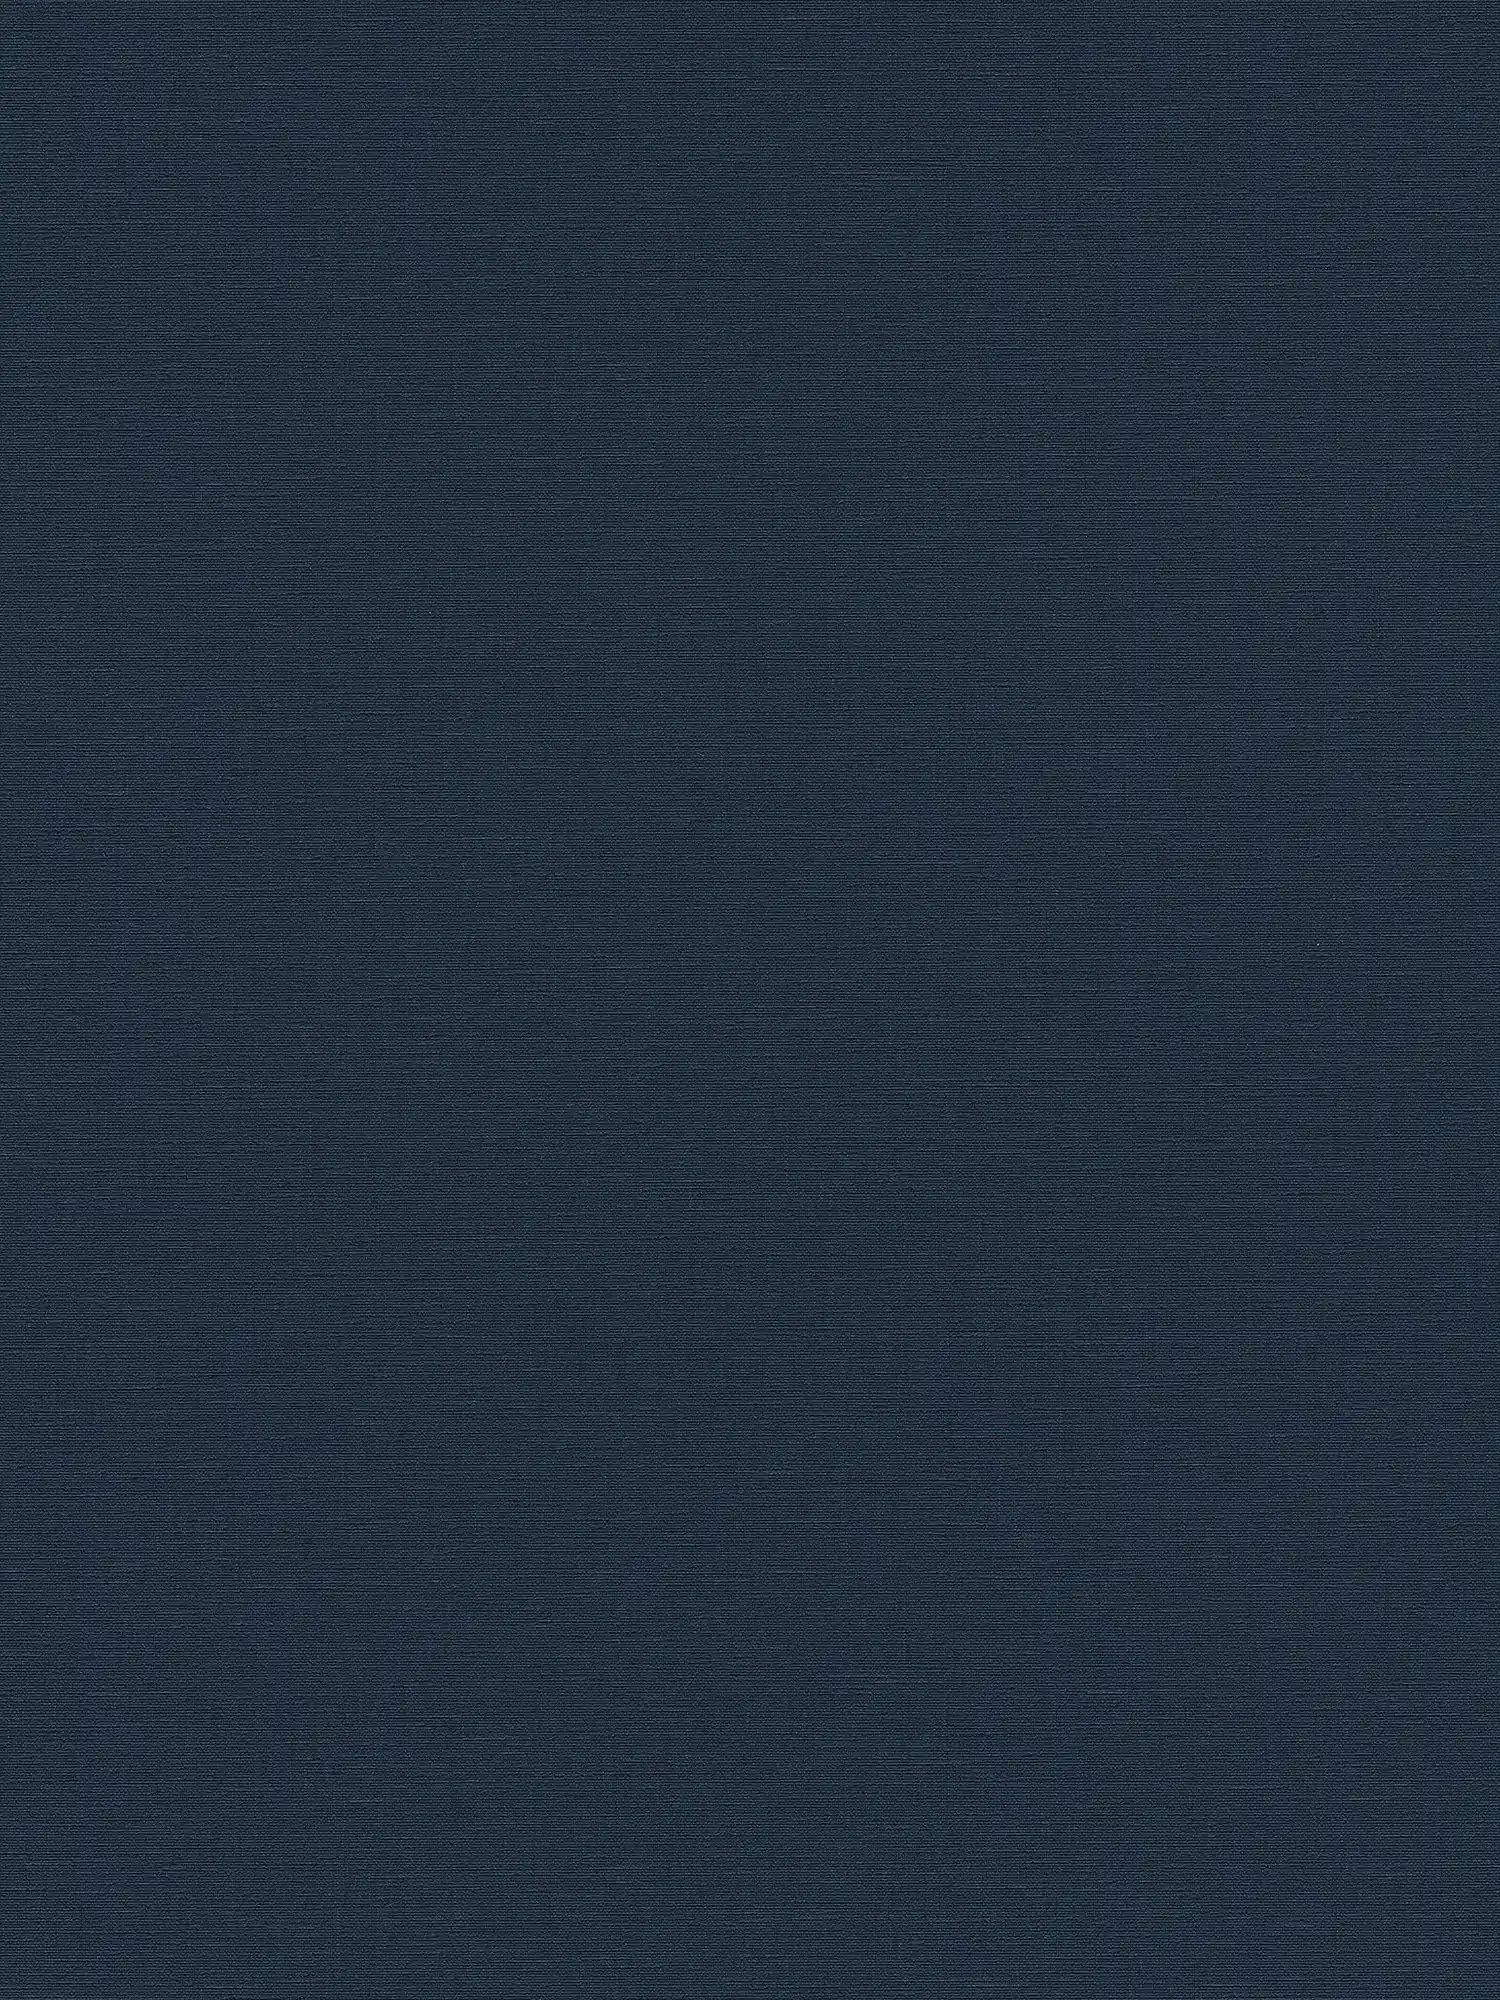 Papier peint intissé bleu foncé aspect lin - bleu
